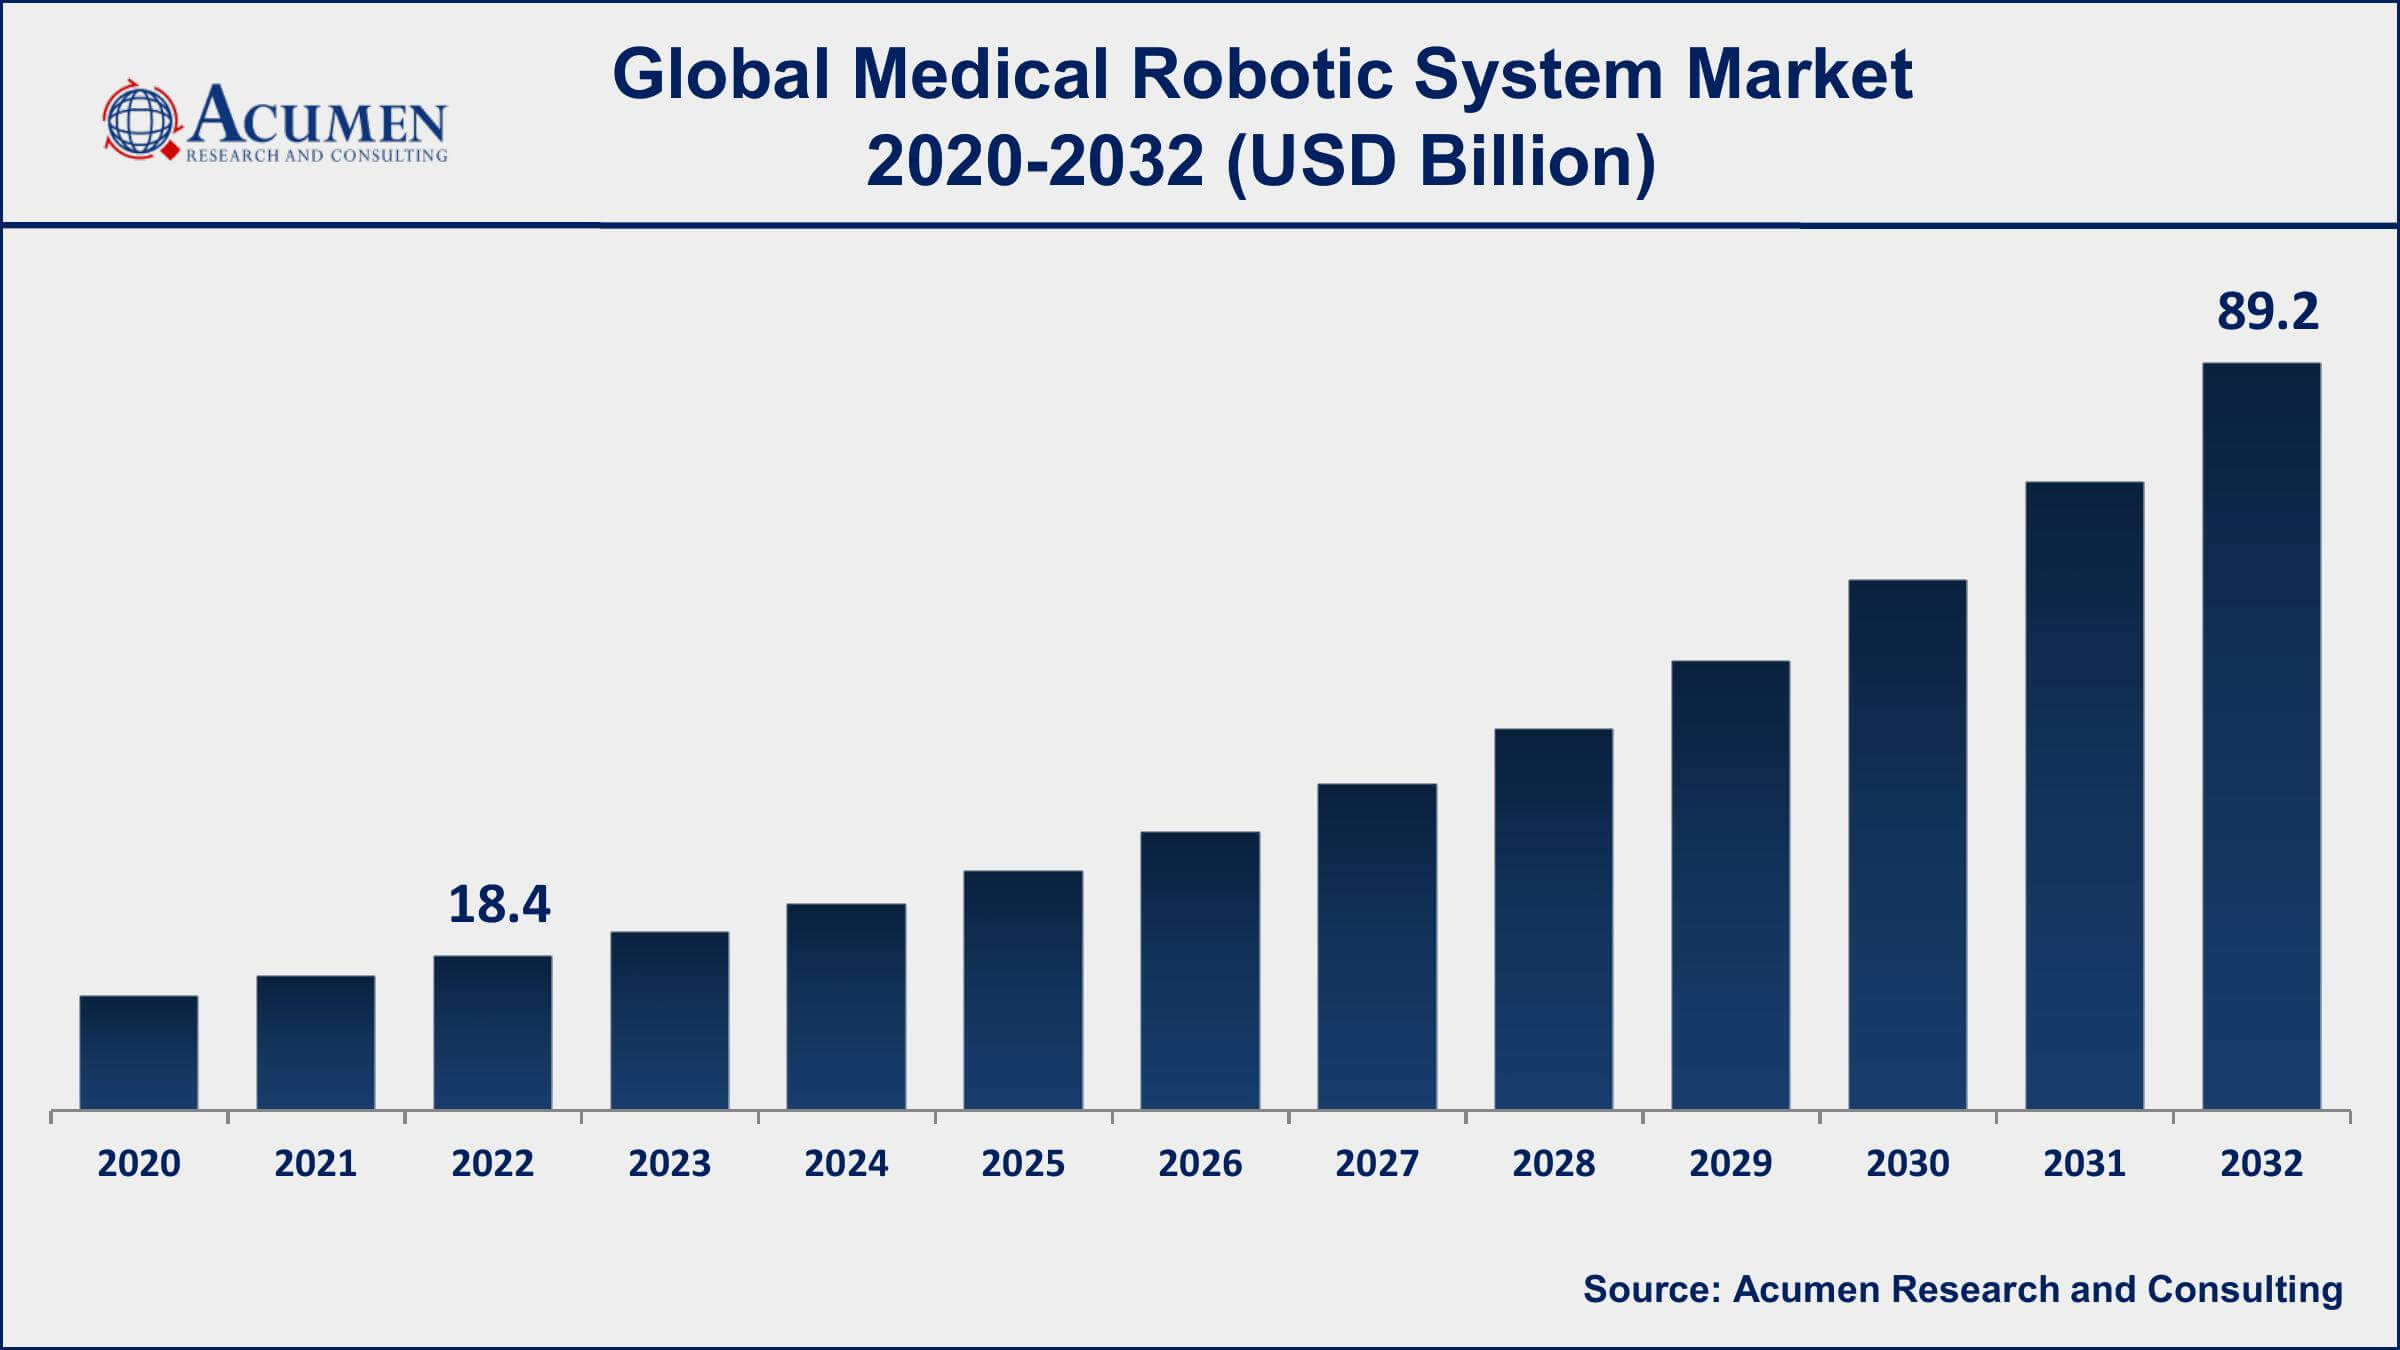 Medical Robotic System Market Drivers